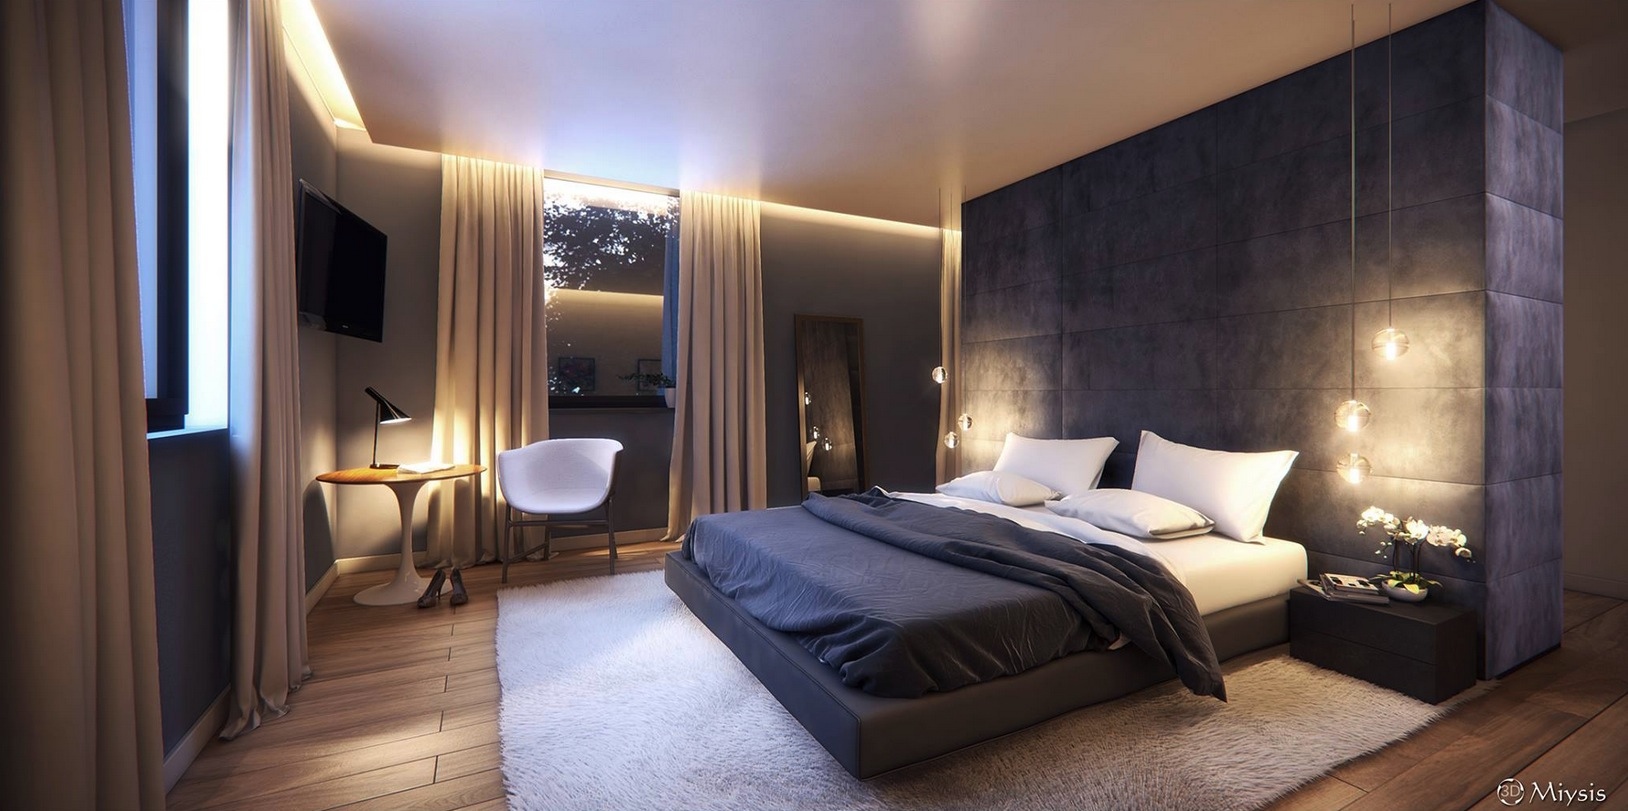 minimalist bedroom decorating ideas "width =" 1628 "height =" 811 "srcset =" https://mileray.com/wp-content/uploads/2020/05/1588507754_156_10-Top-Of-Minimalist-Bedroom-Ideas-Combined-With-Modern-and.jpeg 1628w, https://mileray.com/wp -content / uploads / 2016/10 / Miysis-300x149.jpeg 300w, https://mileray.com/wp-content/uploads/2016/10/Miysis-768x383.jpeg 768w, https://mileray.com/wp -content / uploads / 2016/10 / Miysis-1024x510.jpeg 1024w, https://mileray.com/wp-content/uploads/2016/10/Miysis-324x160.jpeg 324w, https://mileray.com/wp -content / uploads / 2016/10 / Miysis-696x347.jpeg 696w, https://mileray.com/wp-content/uploads/2016/10/Miysis-1068x532.jpeg 1068w, https://mileray.com/wp -content / uploads / 2016/10 / Miysis-843x420.jpeg 843w "sizes =" (maximum width: 1628px) 100vw, 1628px